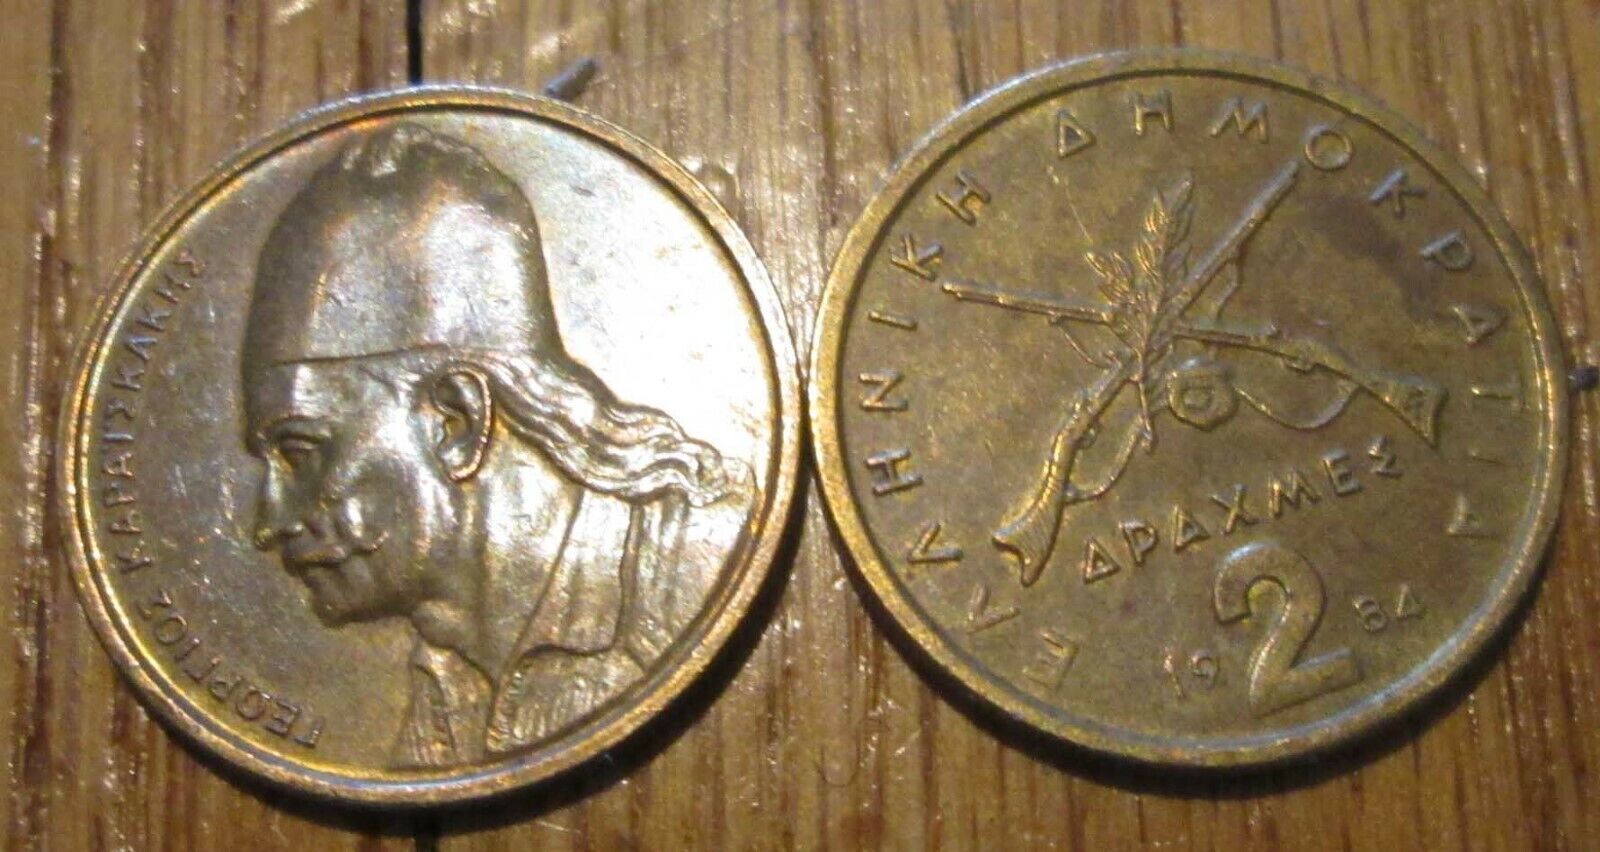 Greece 2 Drachmes Coin 40 Coins Nickel Brass Circulated Georgios Karaiskakis # 2 Без бренда - фотография #3